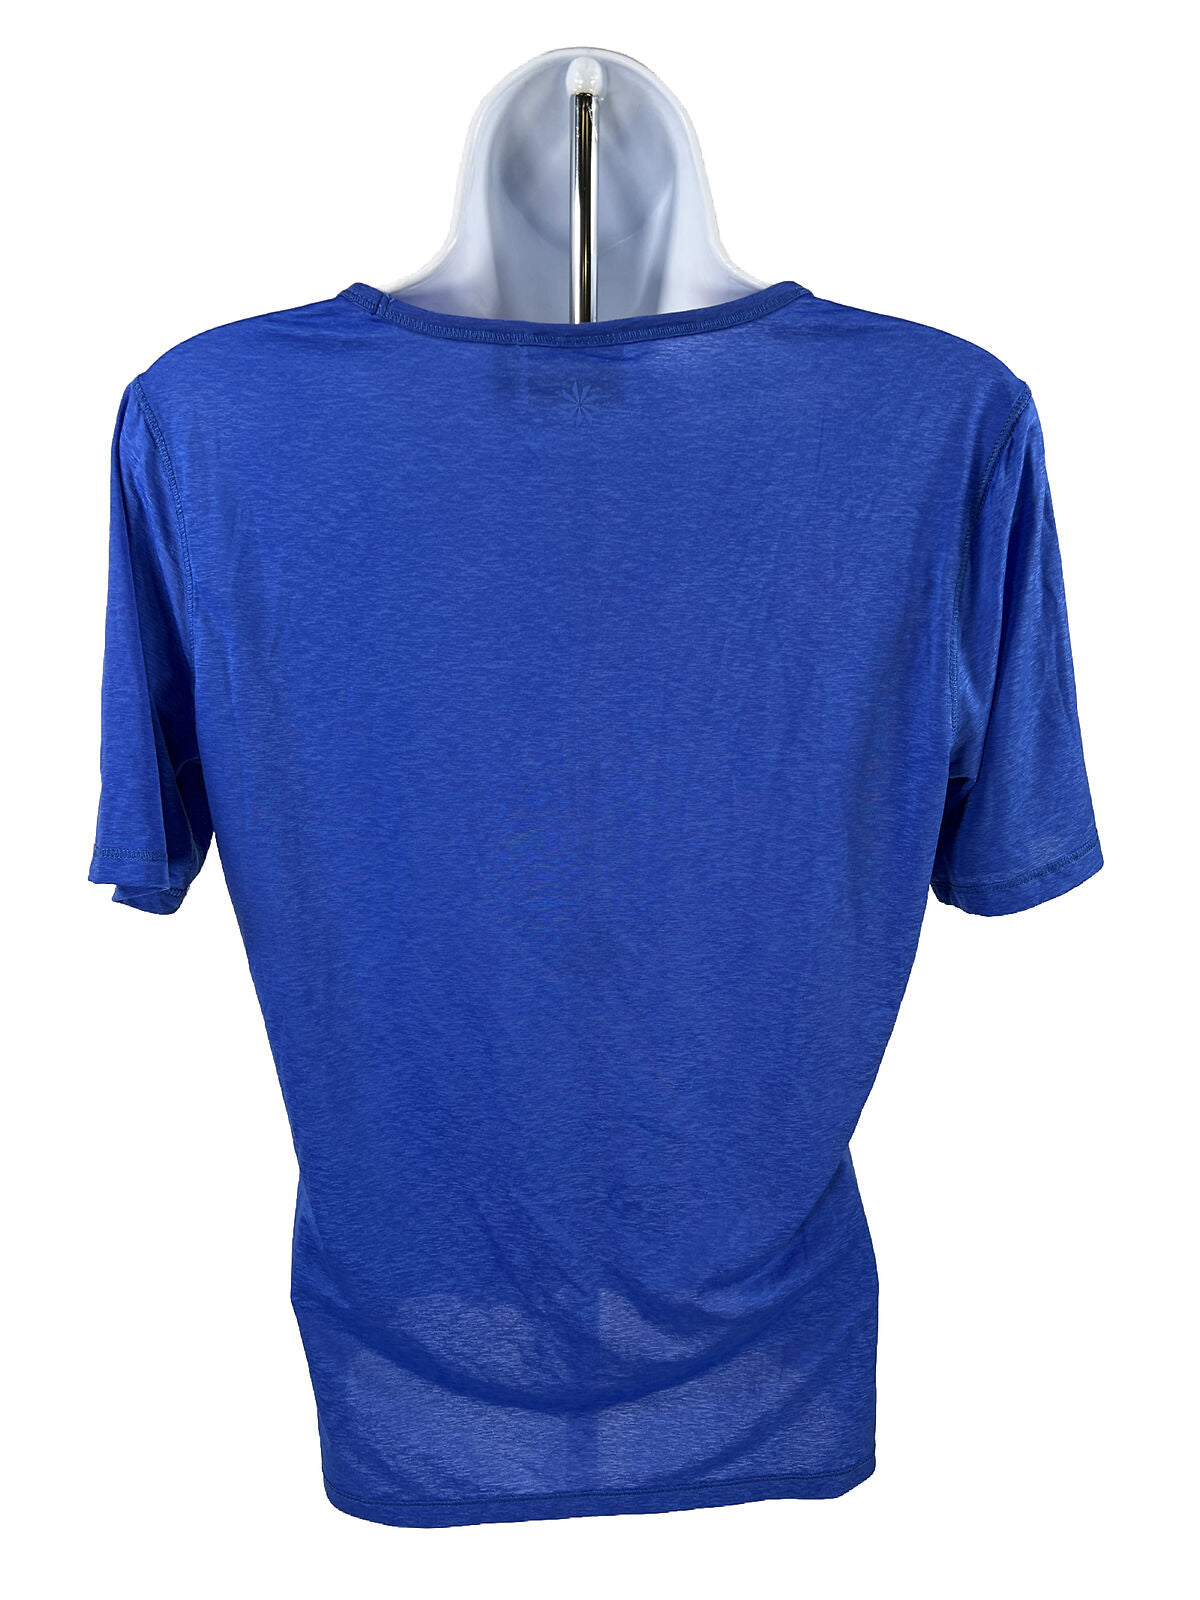 Athleta Women's Blue V-Neck Short Sleeve Athletic T-Shirt - M